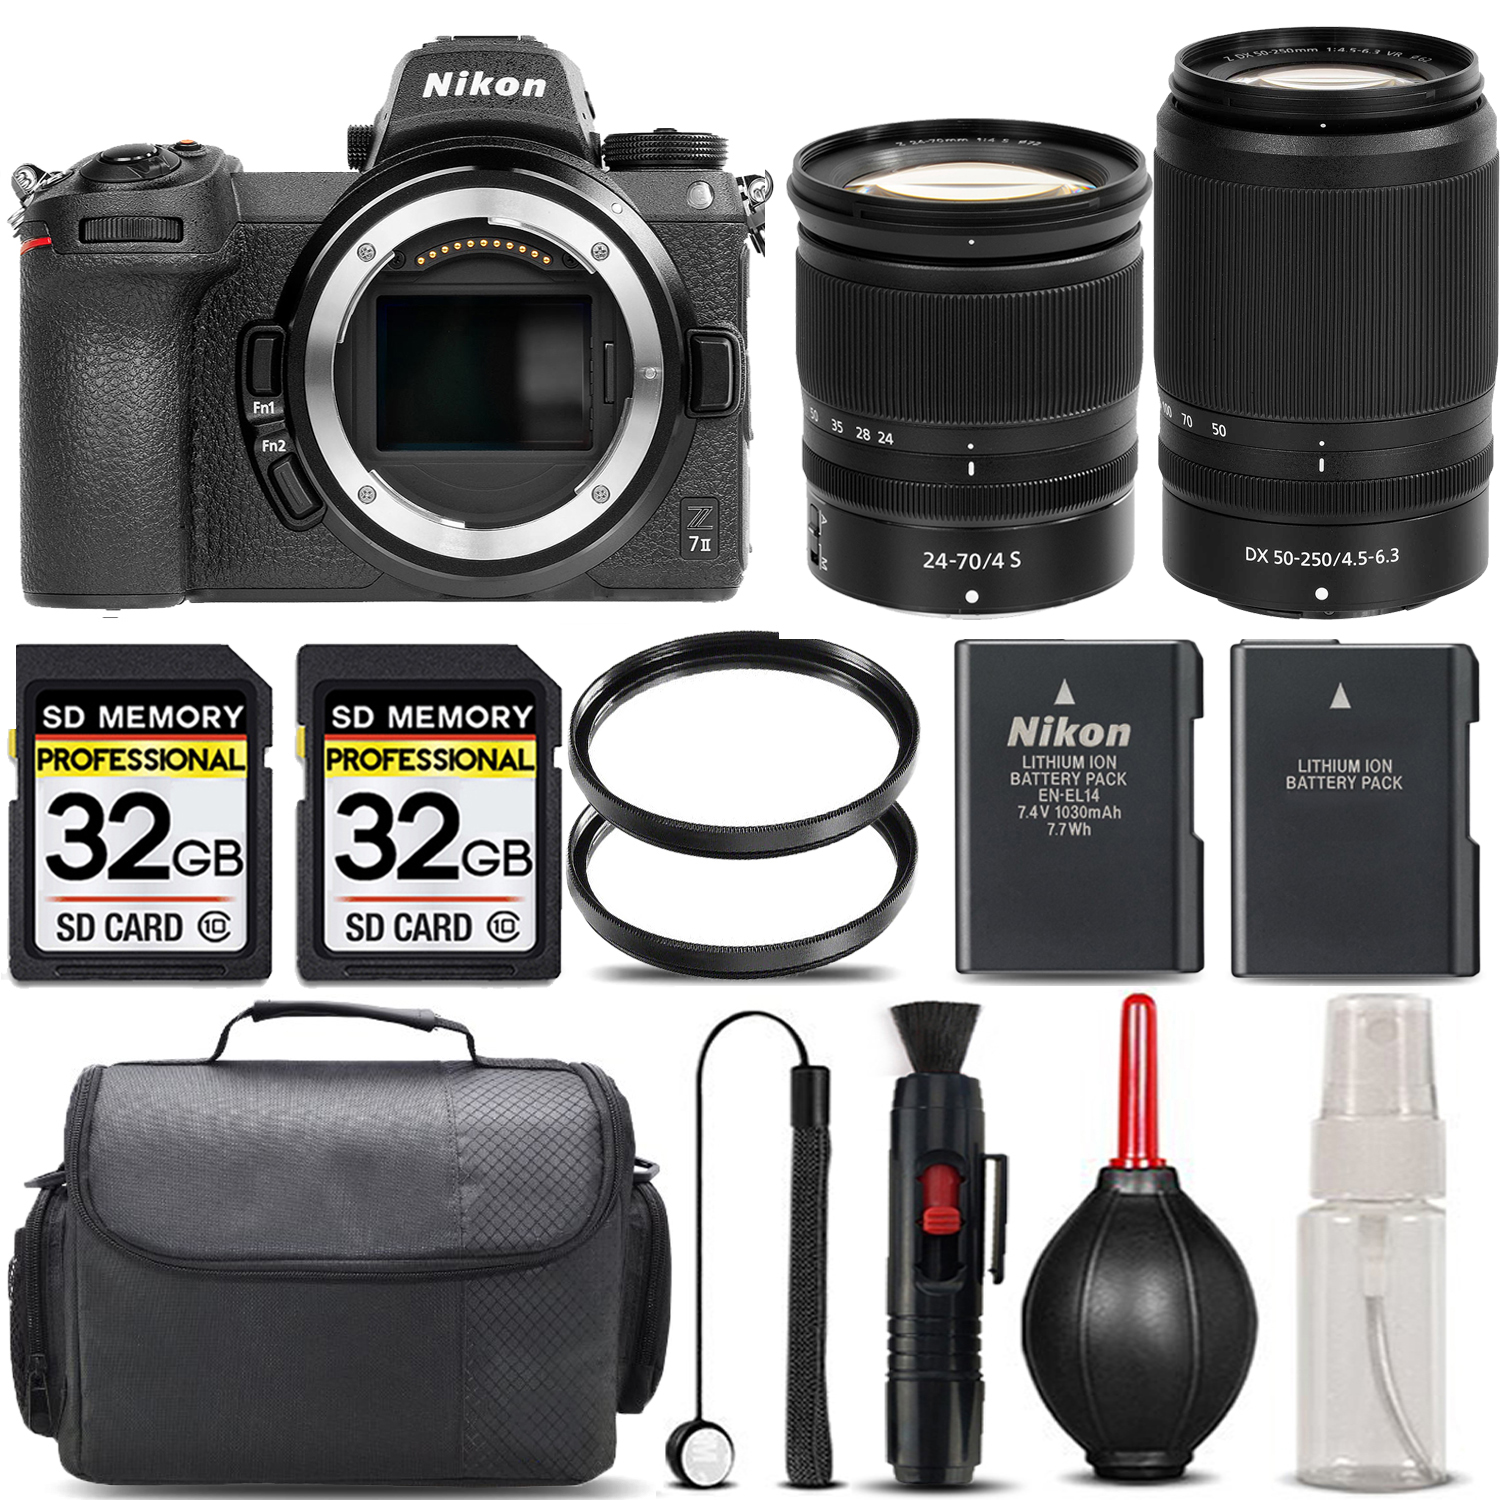 Z7 II Mirrorless + 50-250mm Lens + 24-70mm Lens + Handbag - SAVE BIG KIT *FREE SHIPPING*